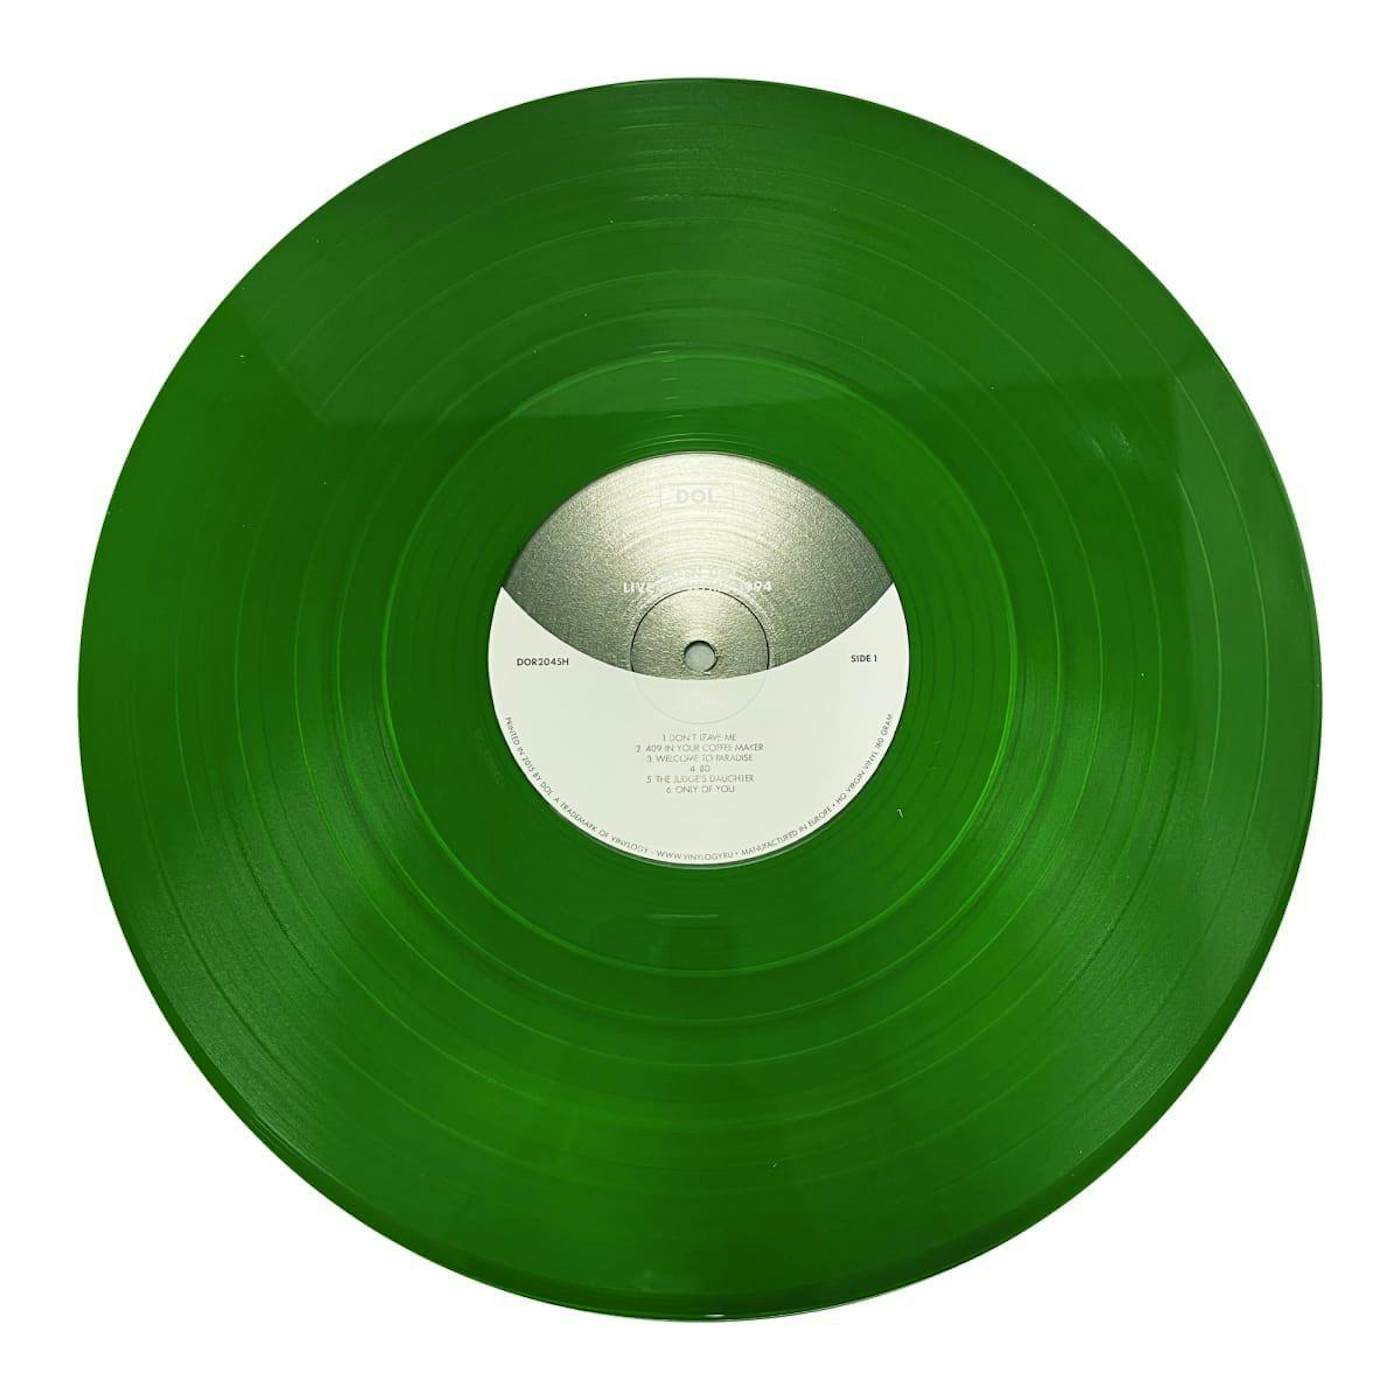 Green Day Live on Green Vinyl LP